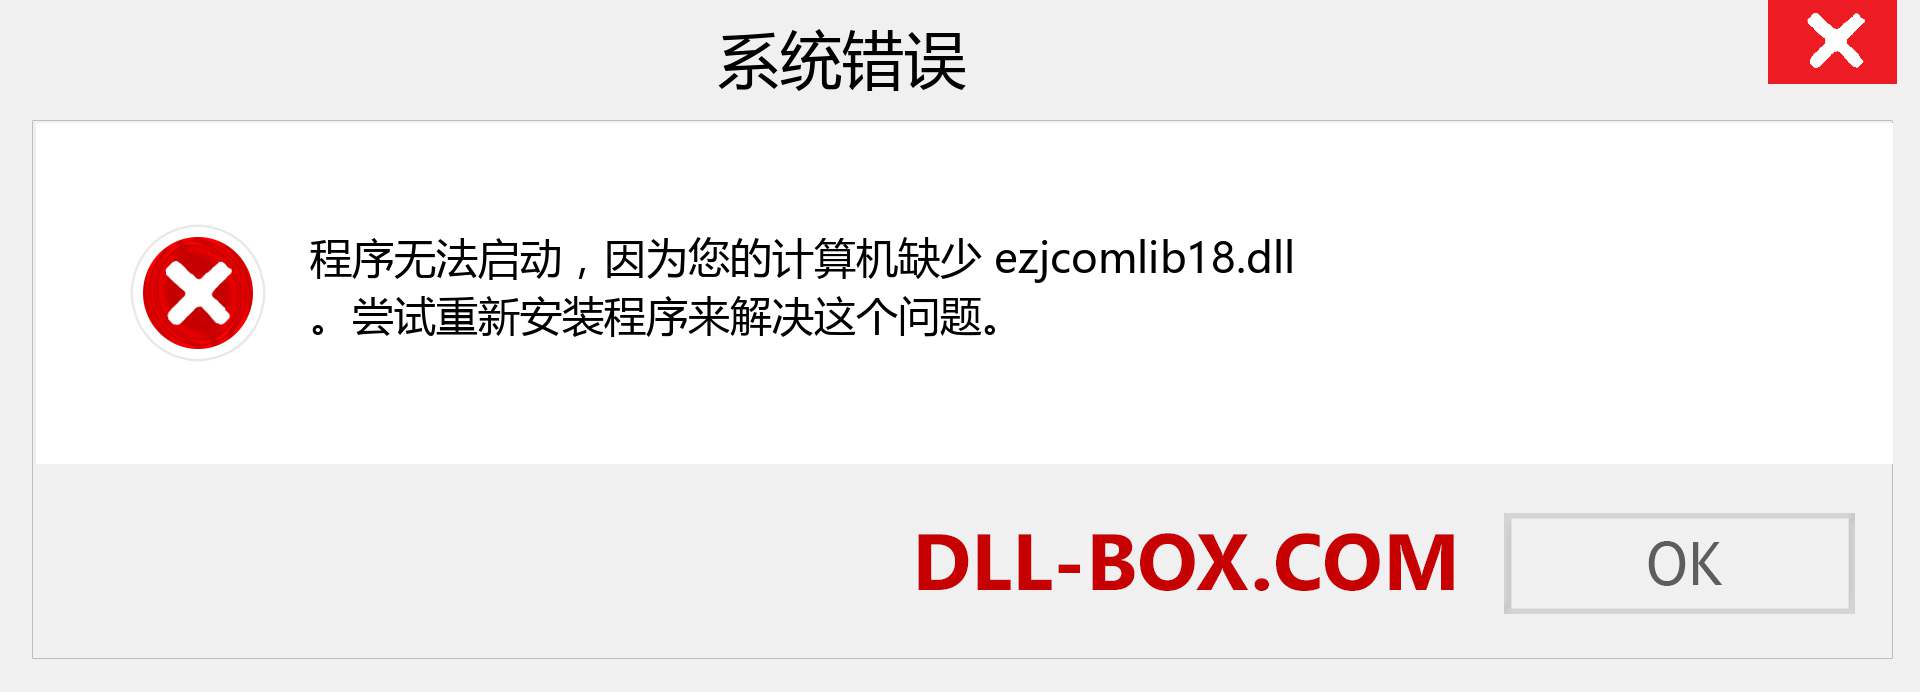 ezjcomlib18.dll 文件丢失？。 适用于 Windows 7、8、10 的下载 - 修复 Windows、照片、图像上的 ezjcomlib18 dll 丢失错误